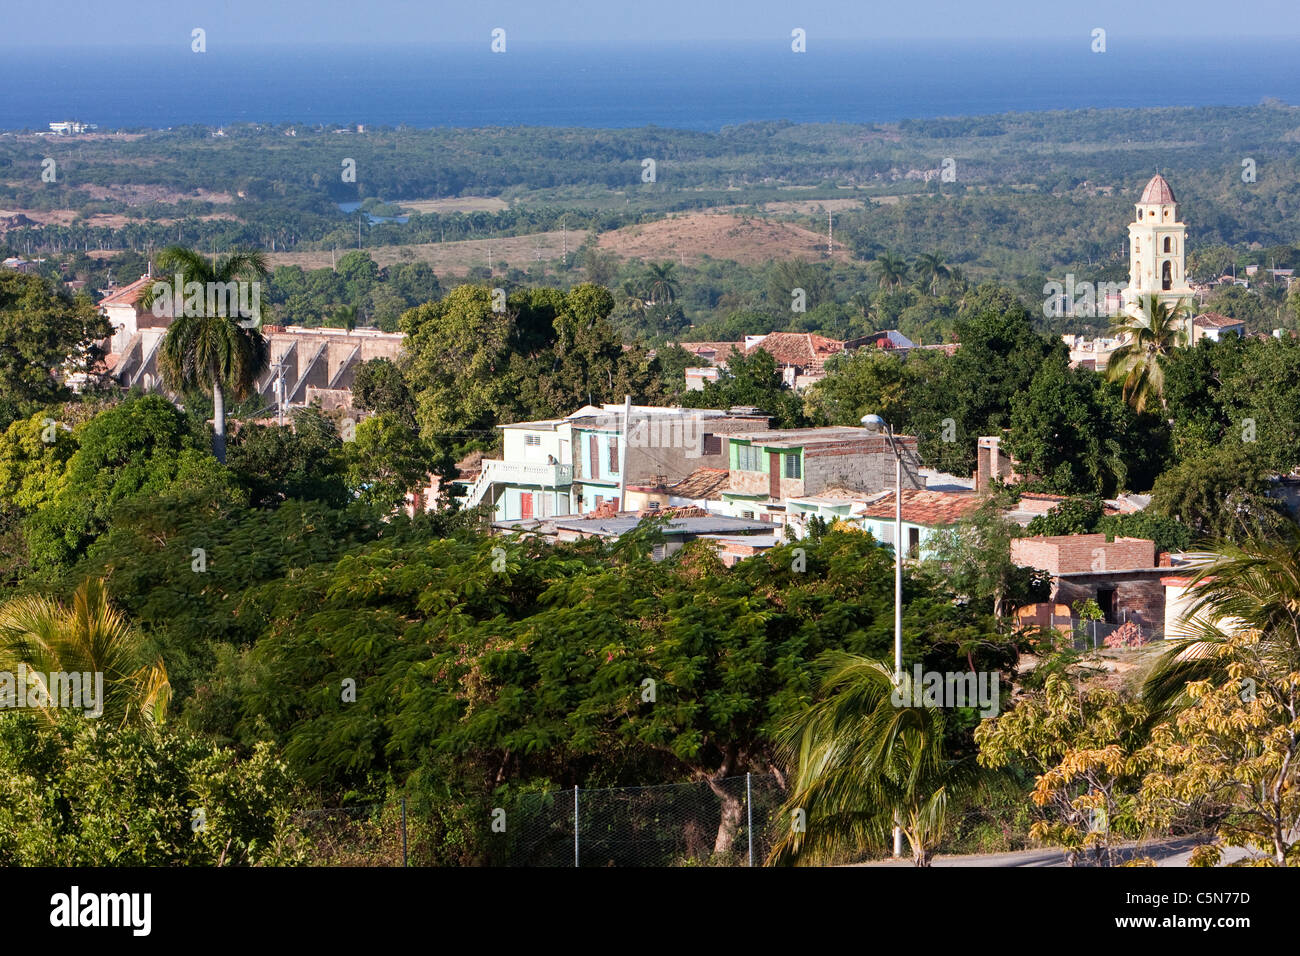 Cuba Trinidad. Vista dalla collina. Torre Campanaria del monastero di San Francisco sulla destra. Mar dei Caraibi a distanza. Foto Stock